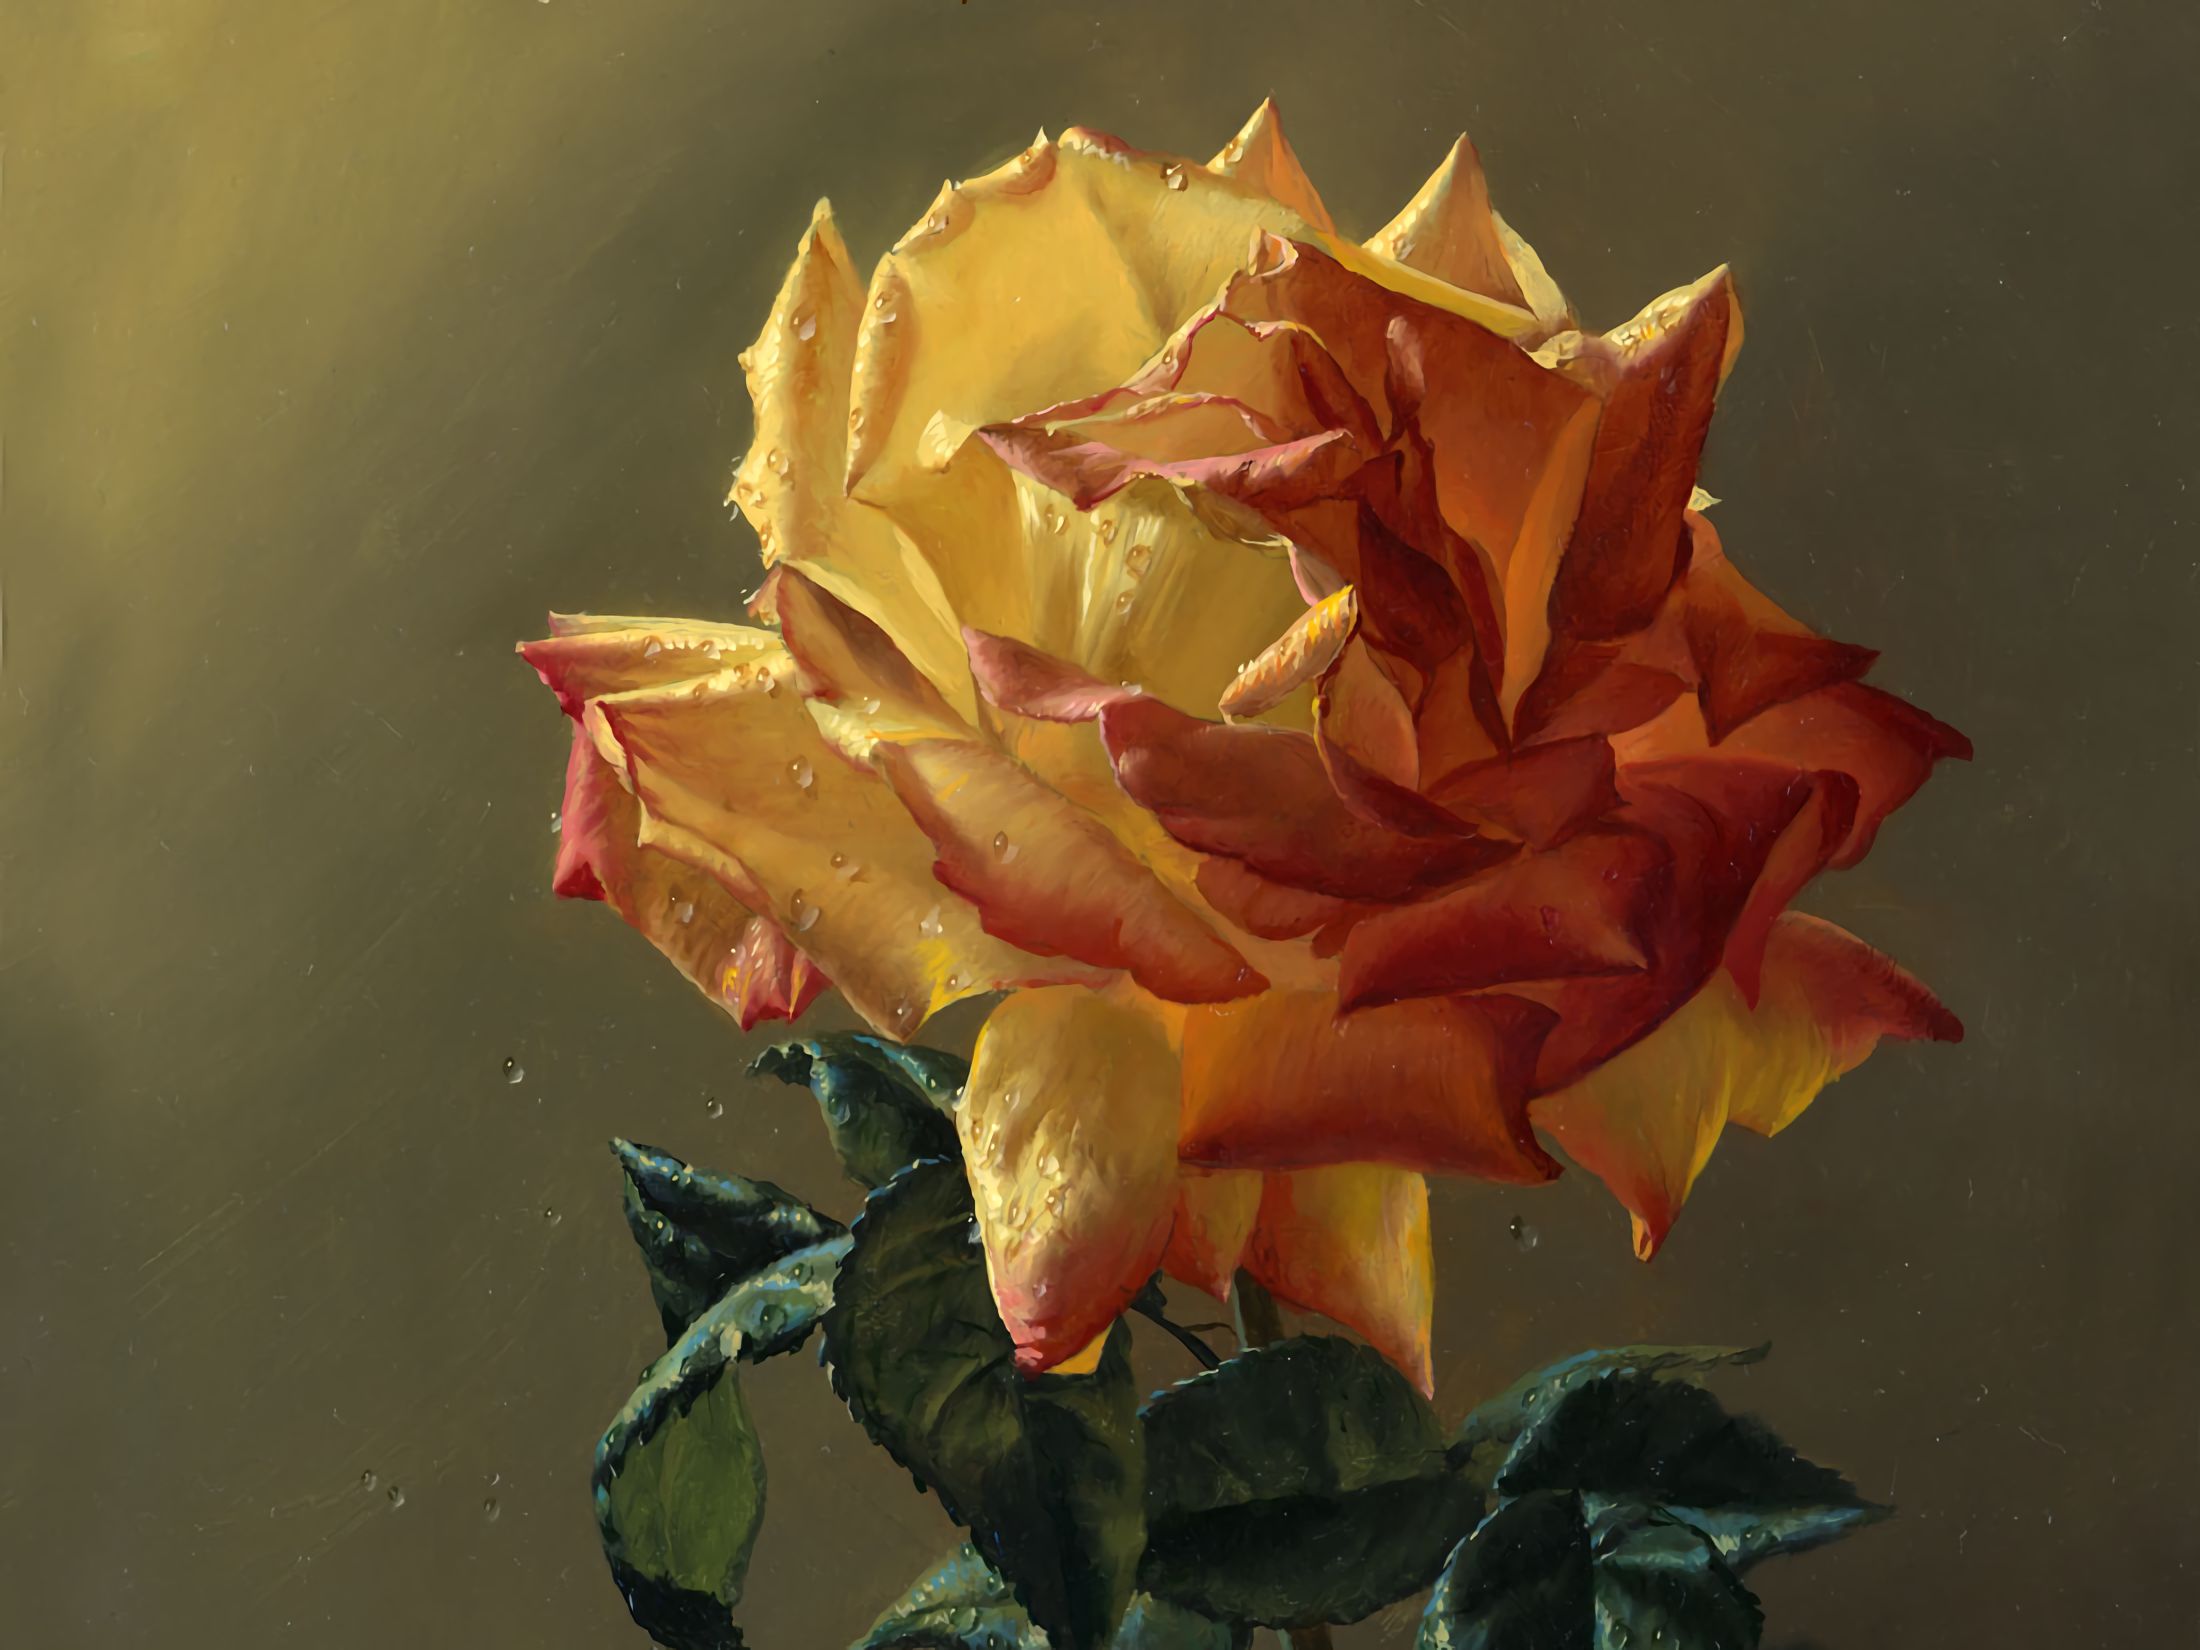 earth, rose, close up, orange (color), stem, yellow flower, flowers